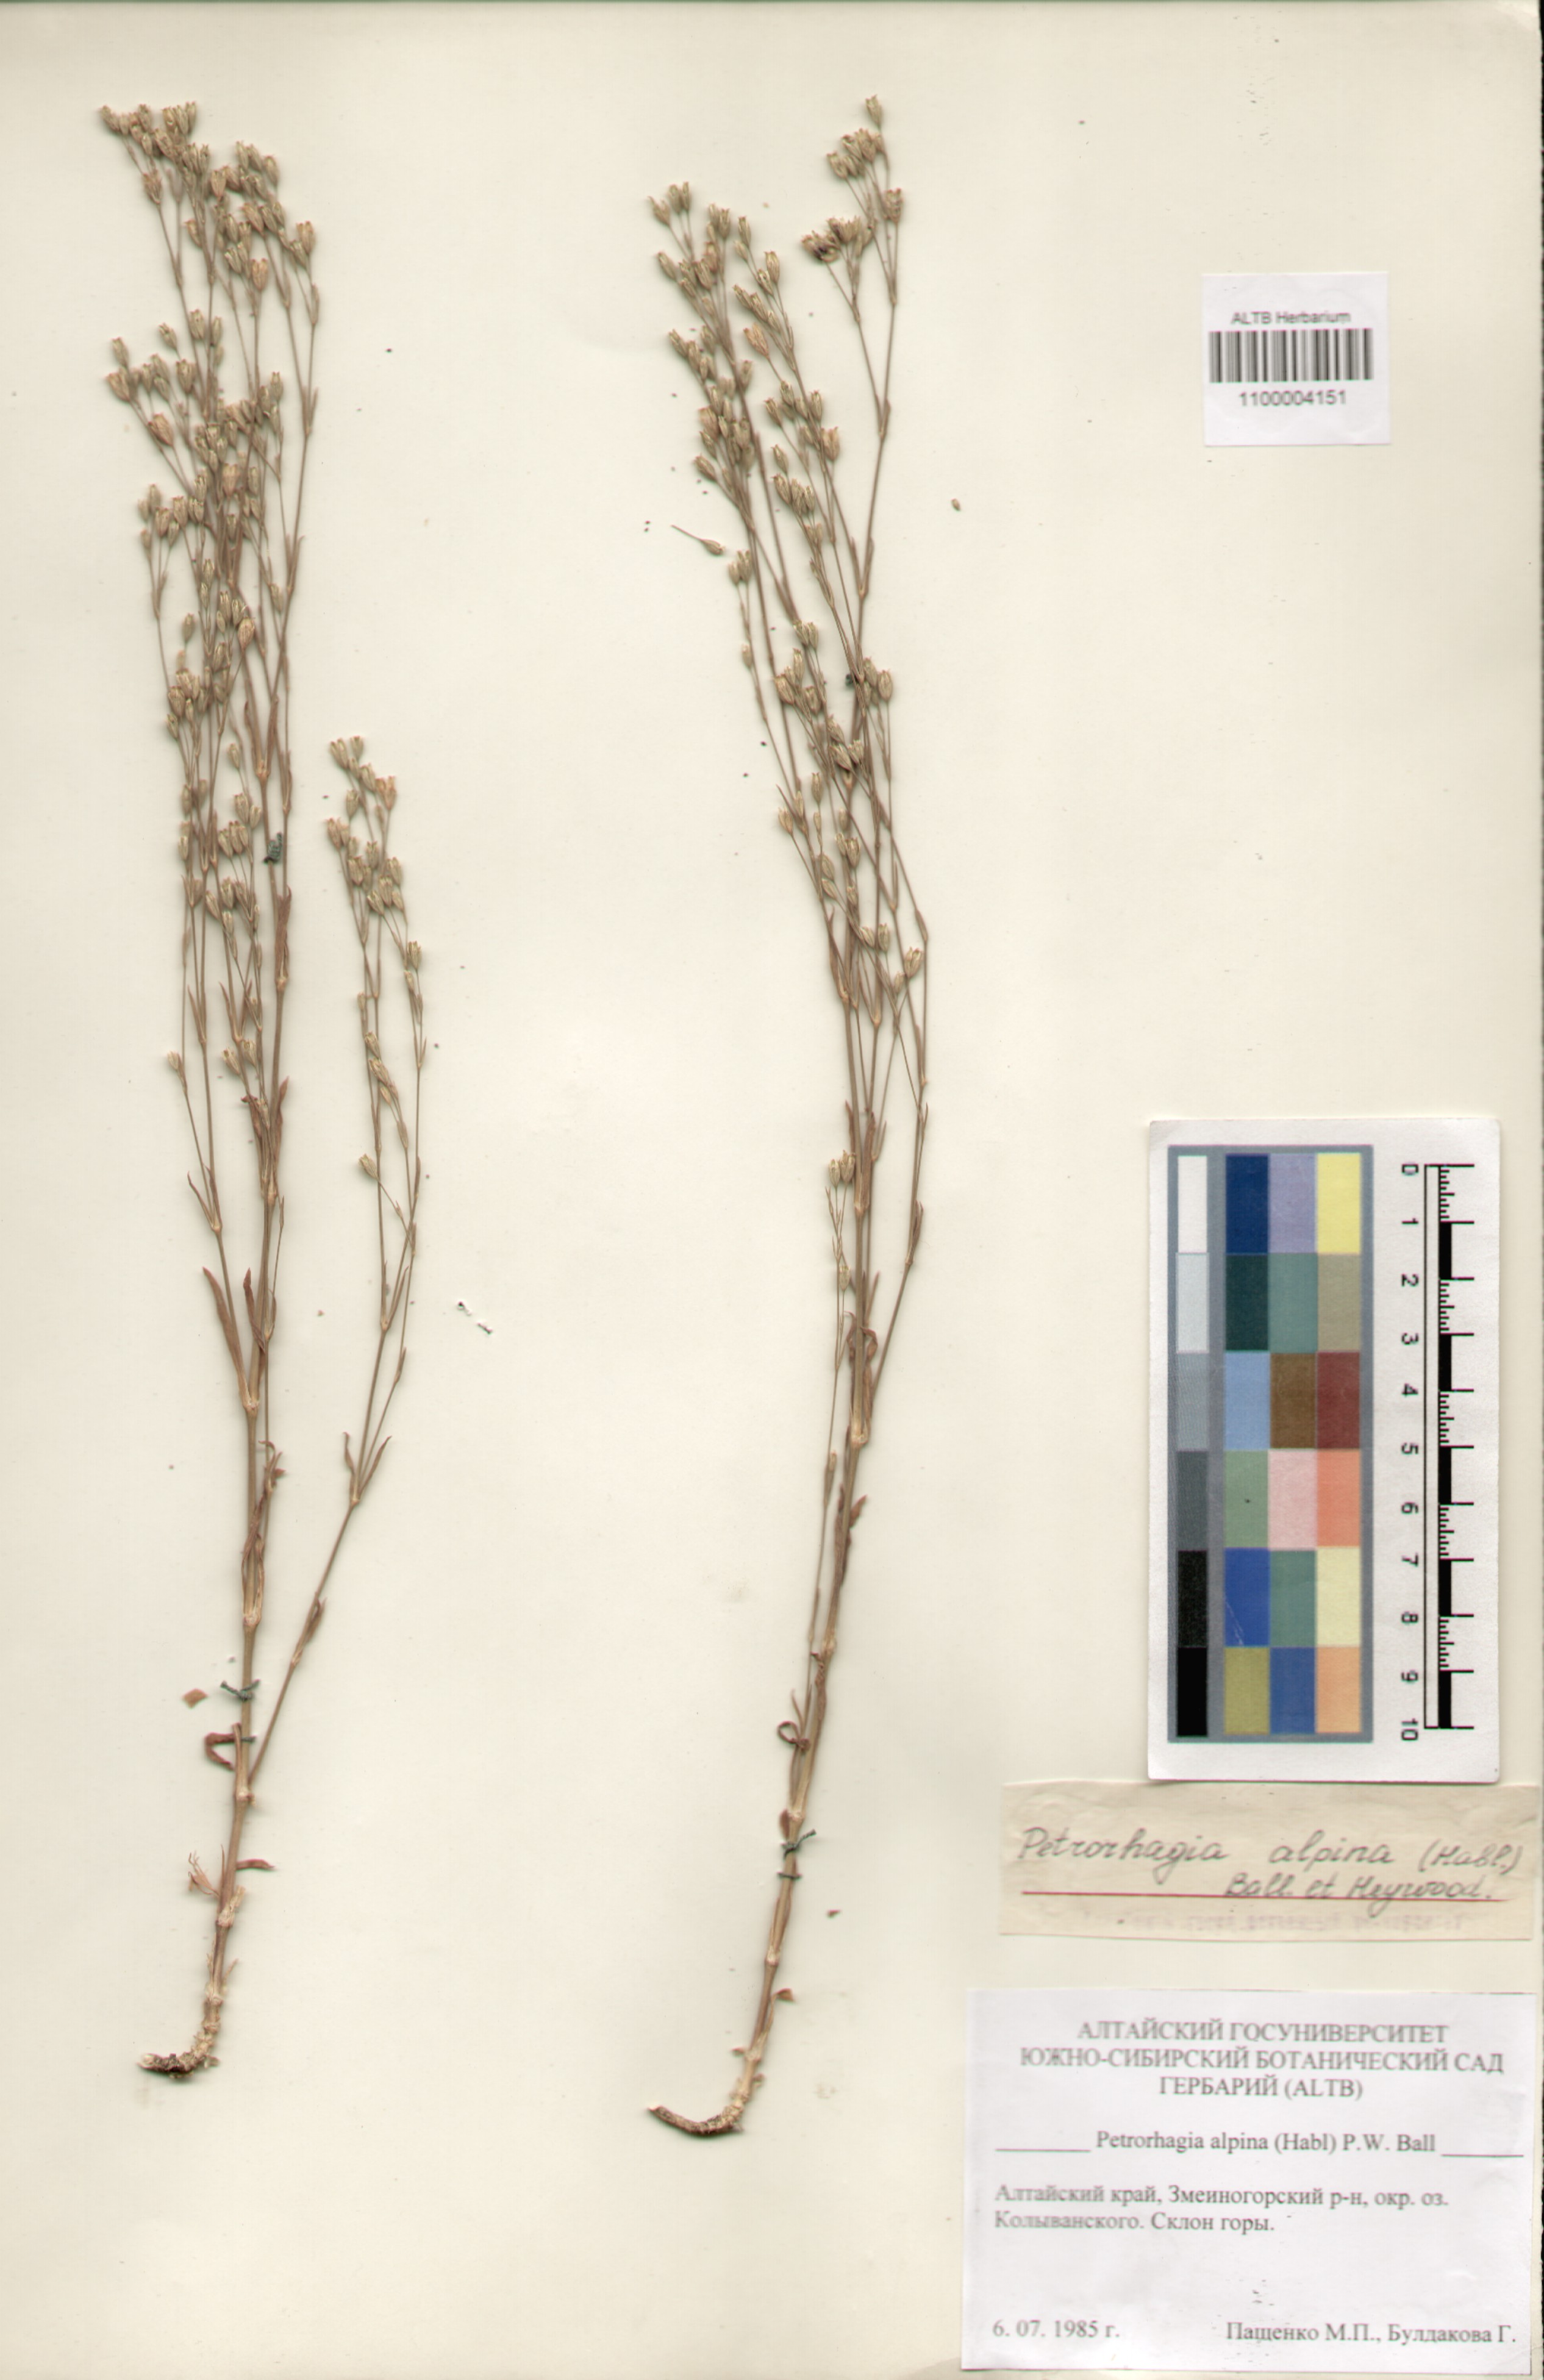 Caryophyllaceae,Petrorhagia alpina (Habl) P.W. Ball